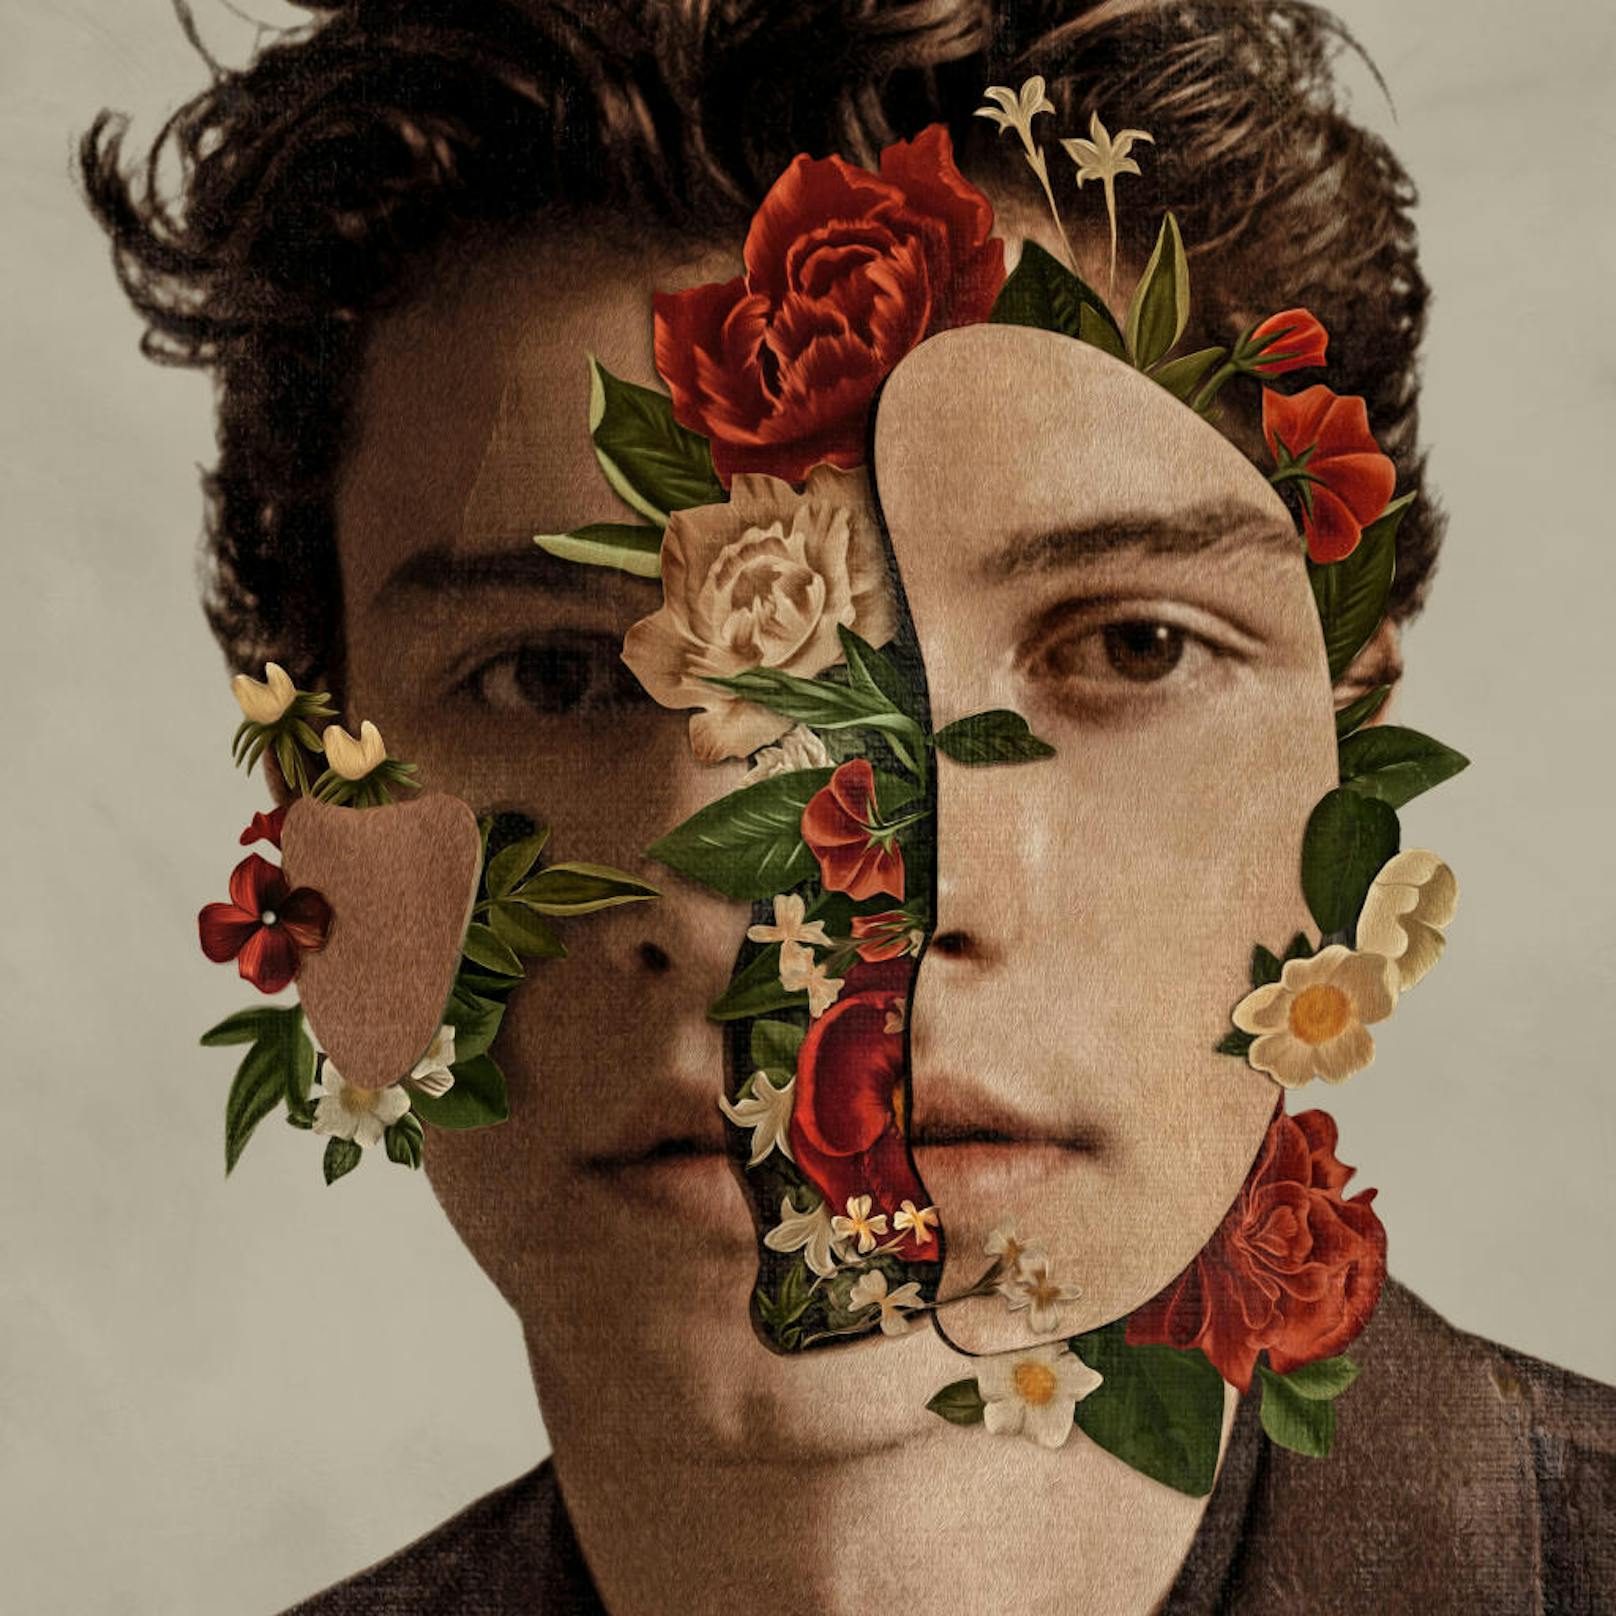 Shawn Mendes - "Shawn Mendes: The Album"